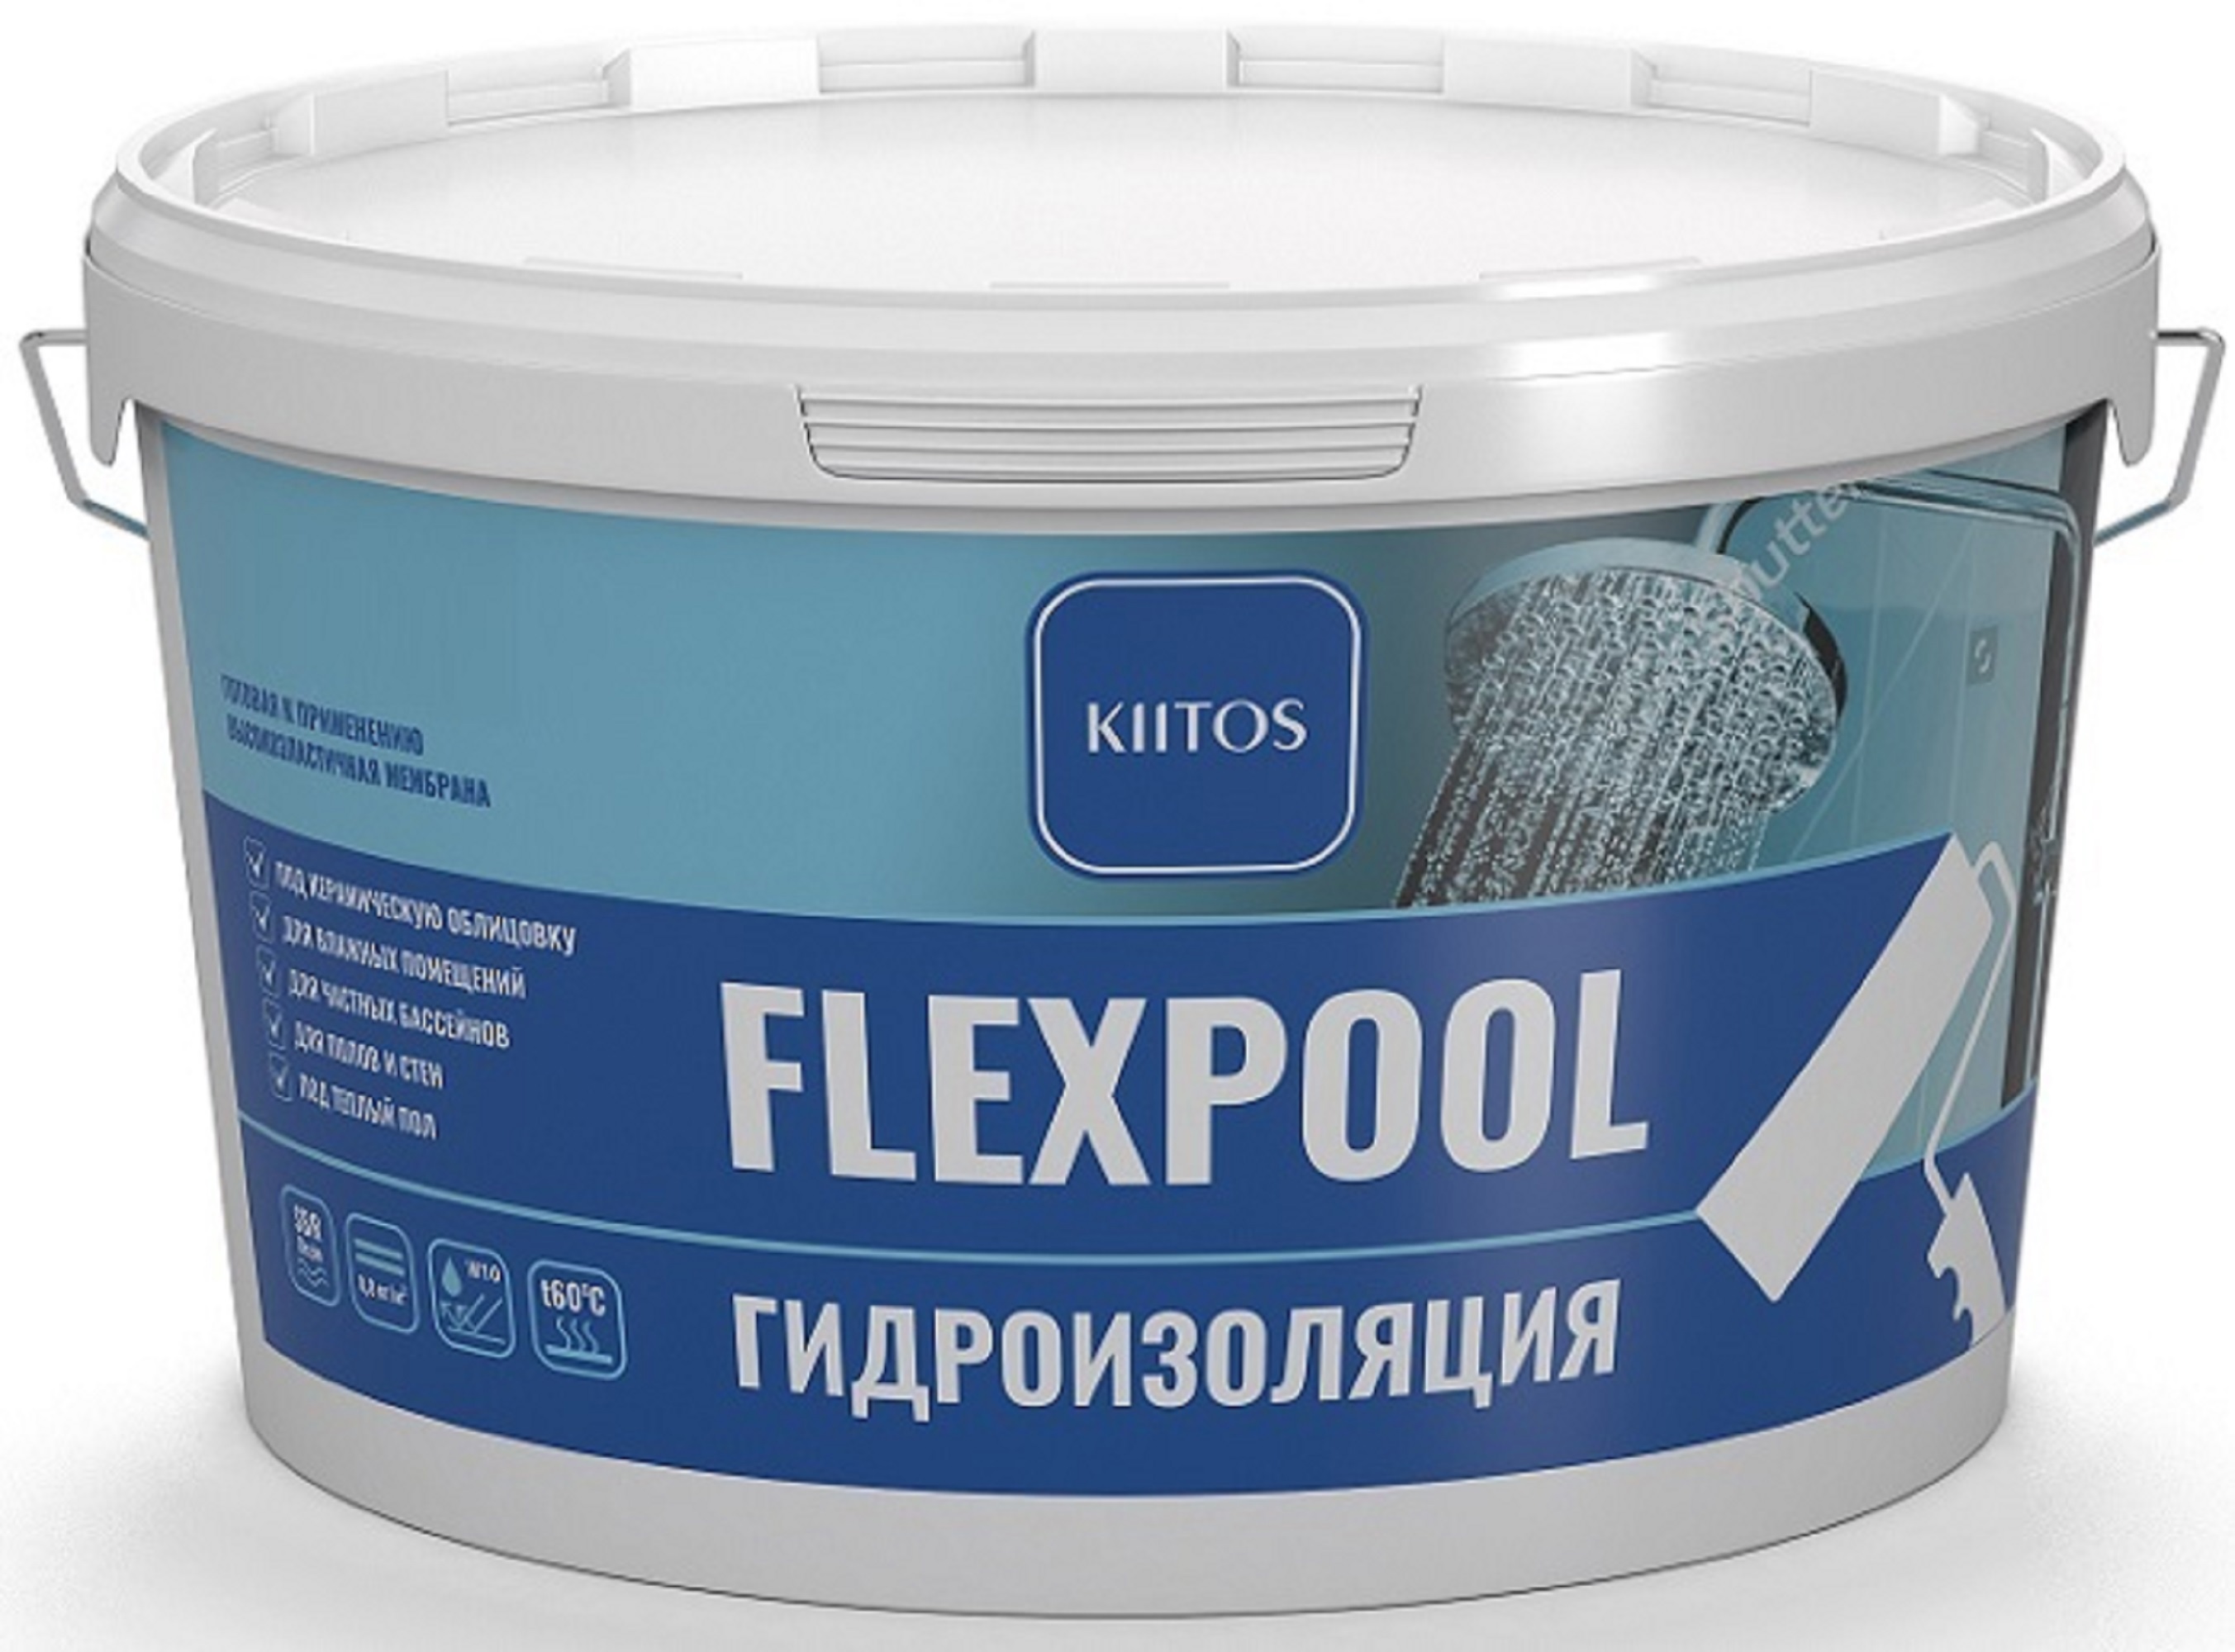 Гидроизоляционная мастика Kiitos Flexpool 7кг по цене 5440 ₽/шт.  .